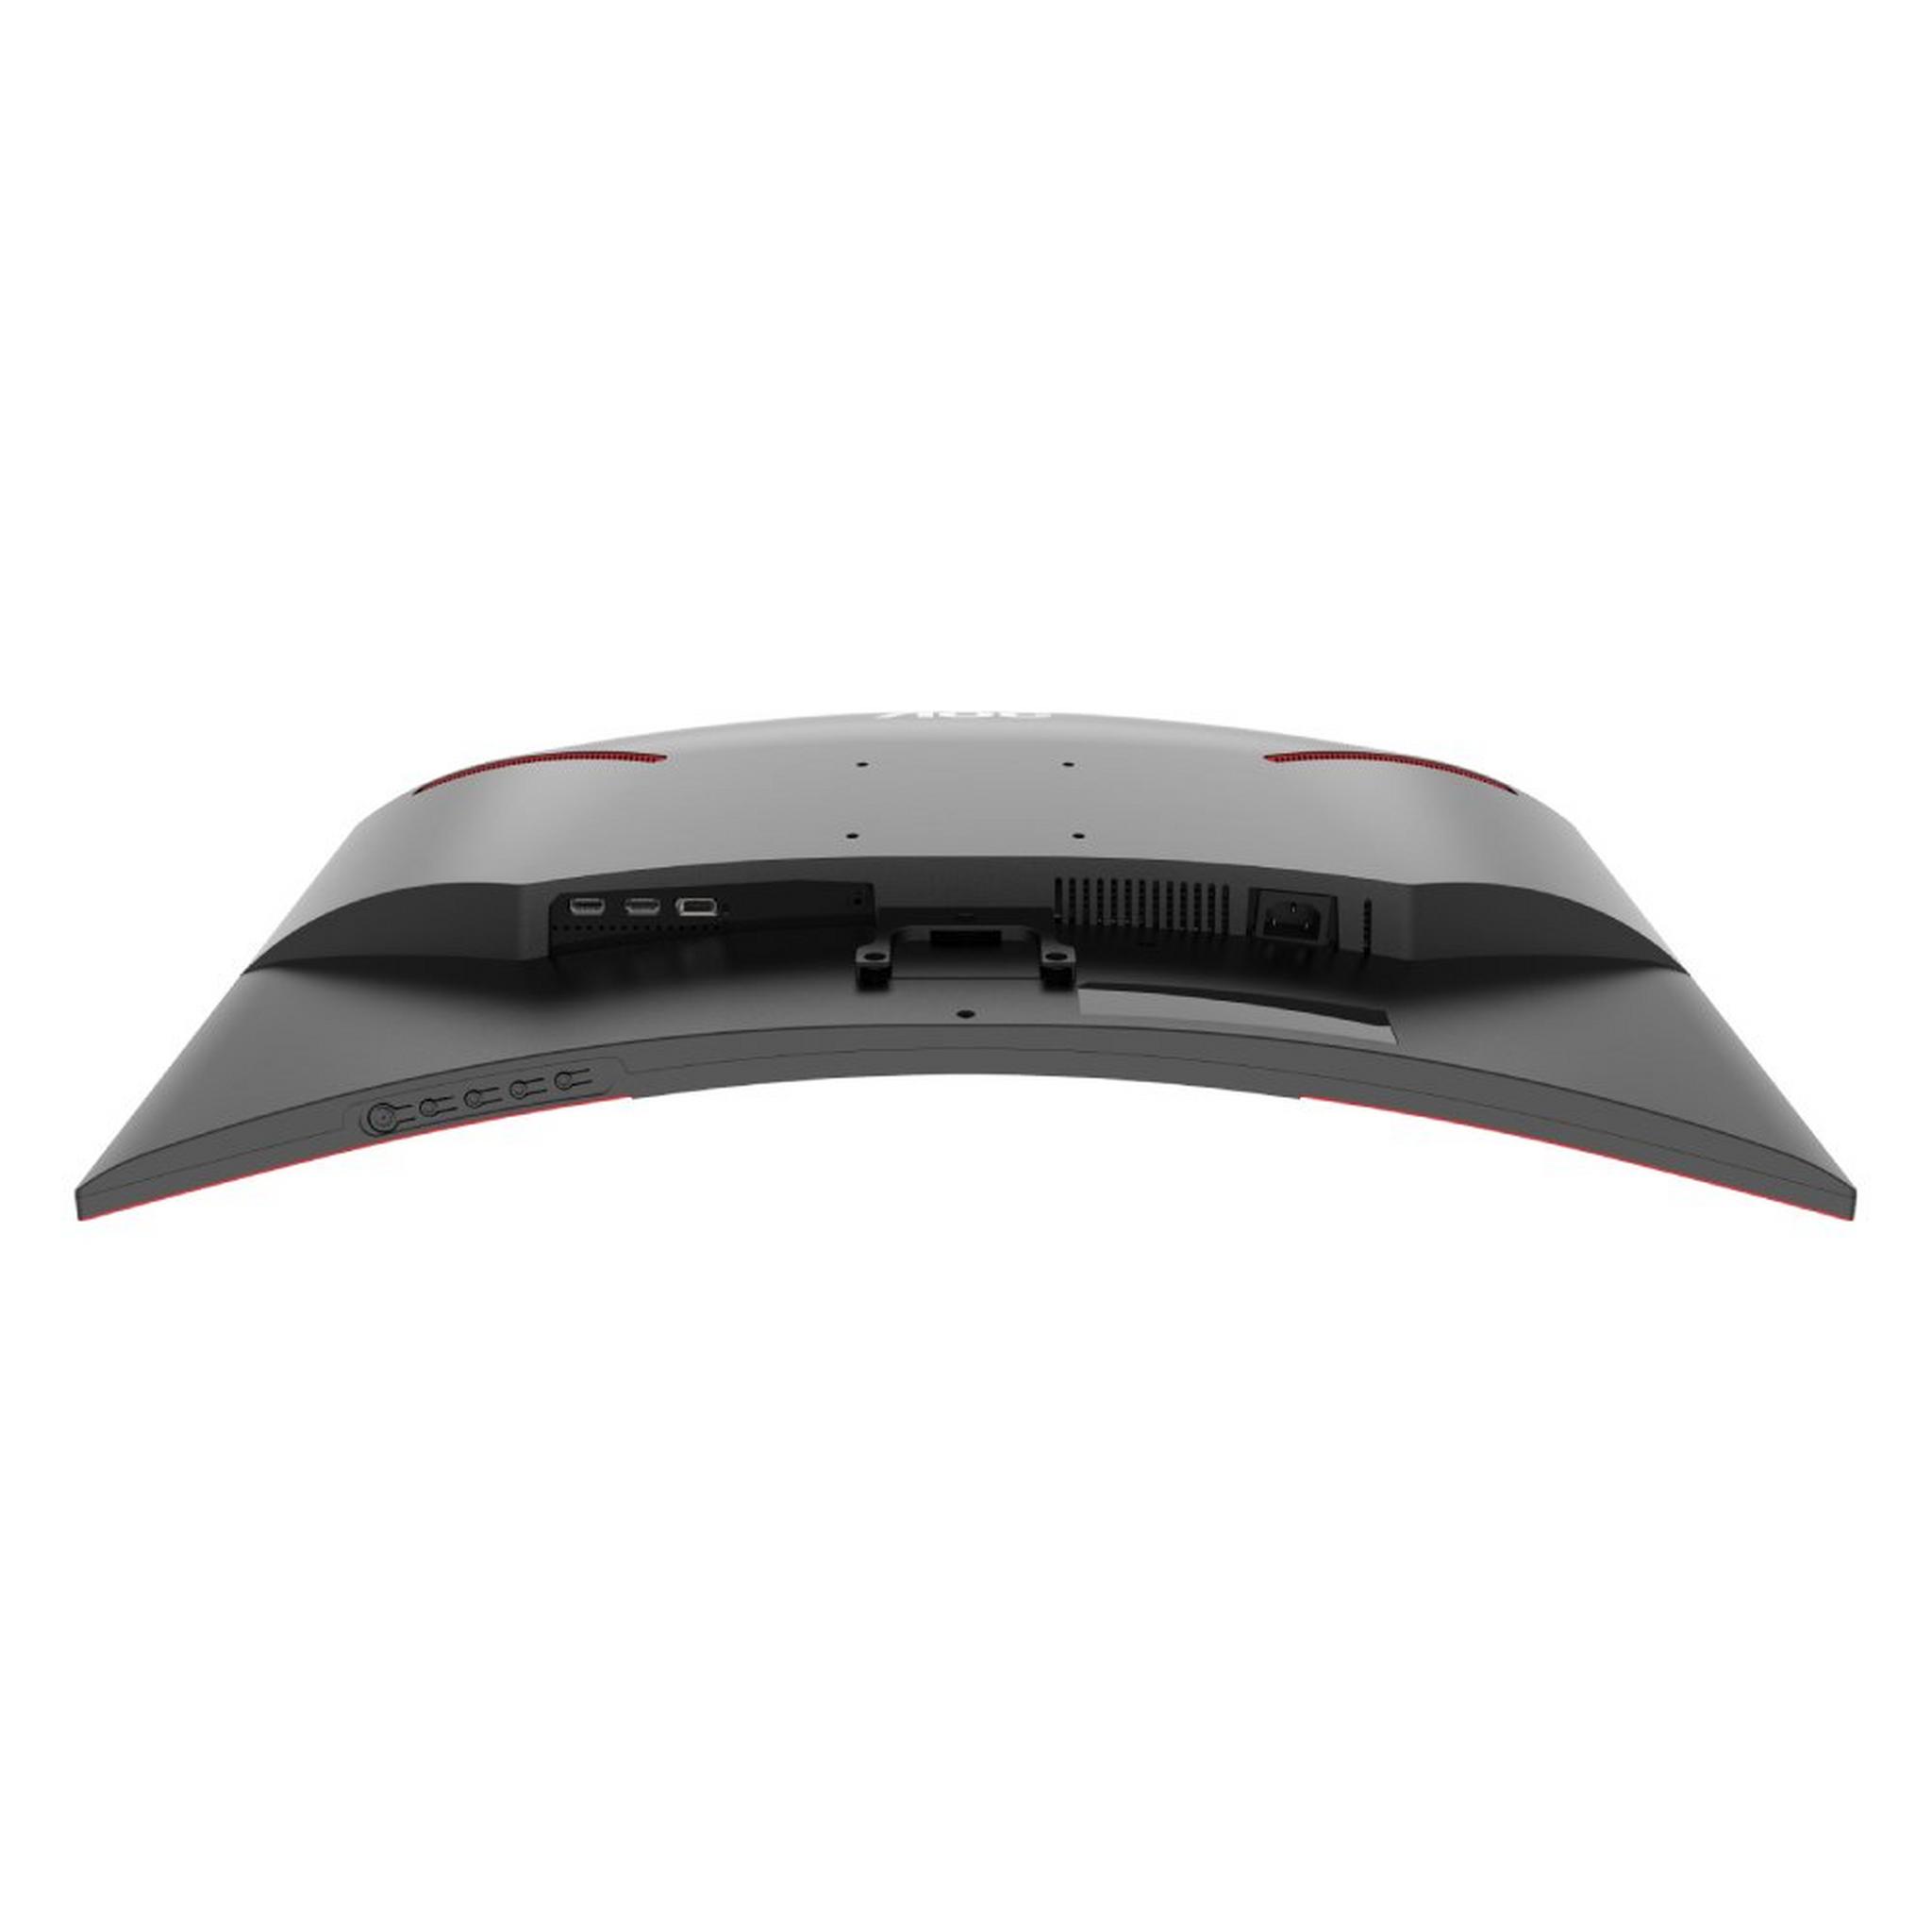 AOC Curved 31.5-Inch QHD 165Hz 1ms Gaming Monitor, CQ32G3SE/89 - Black & Red